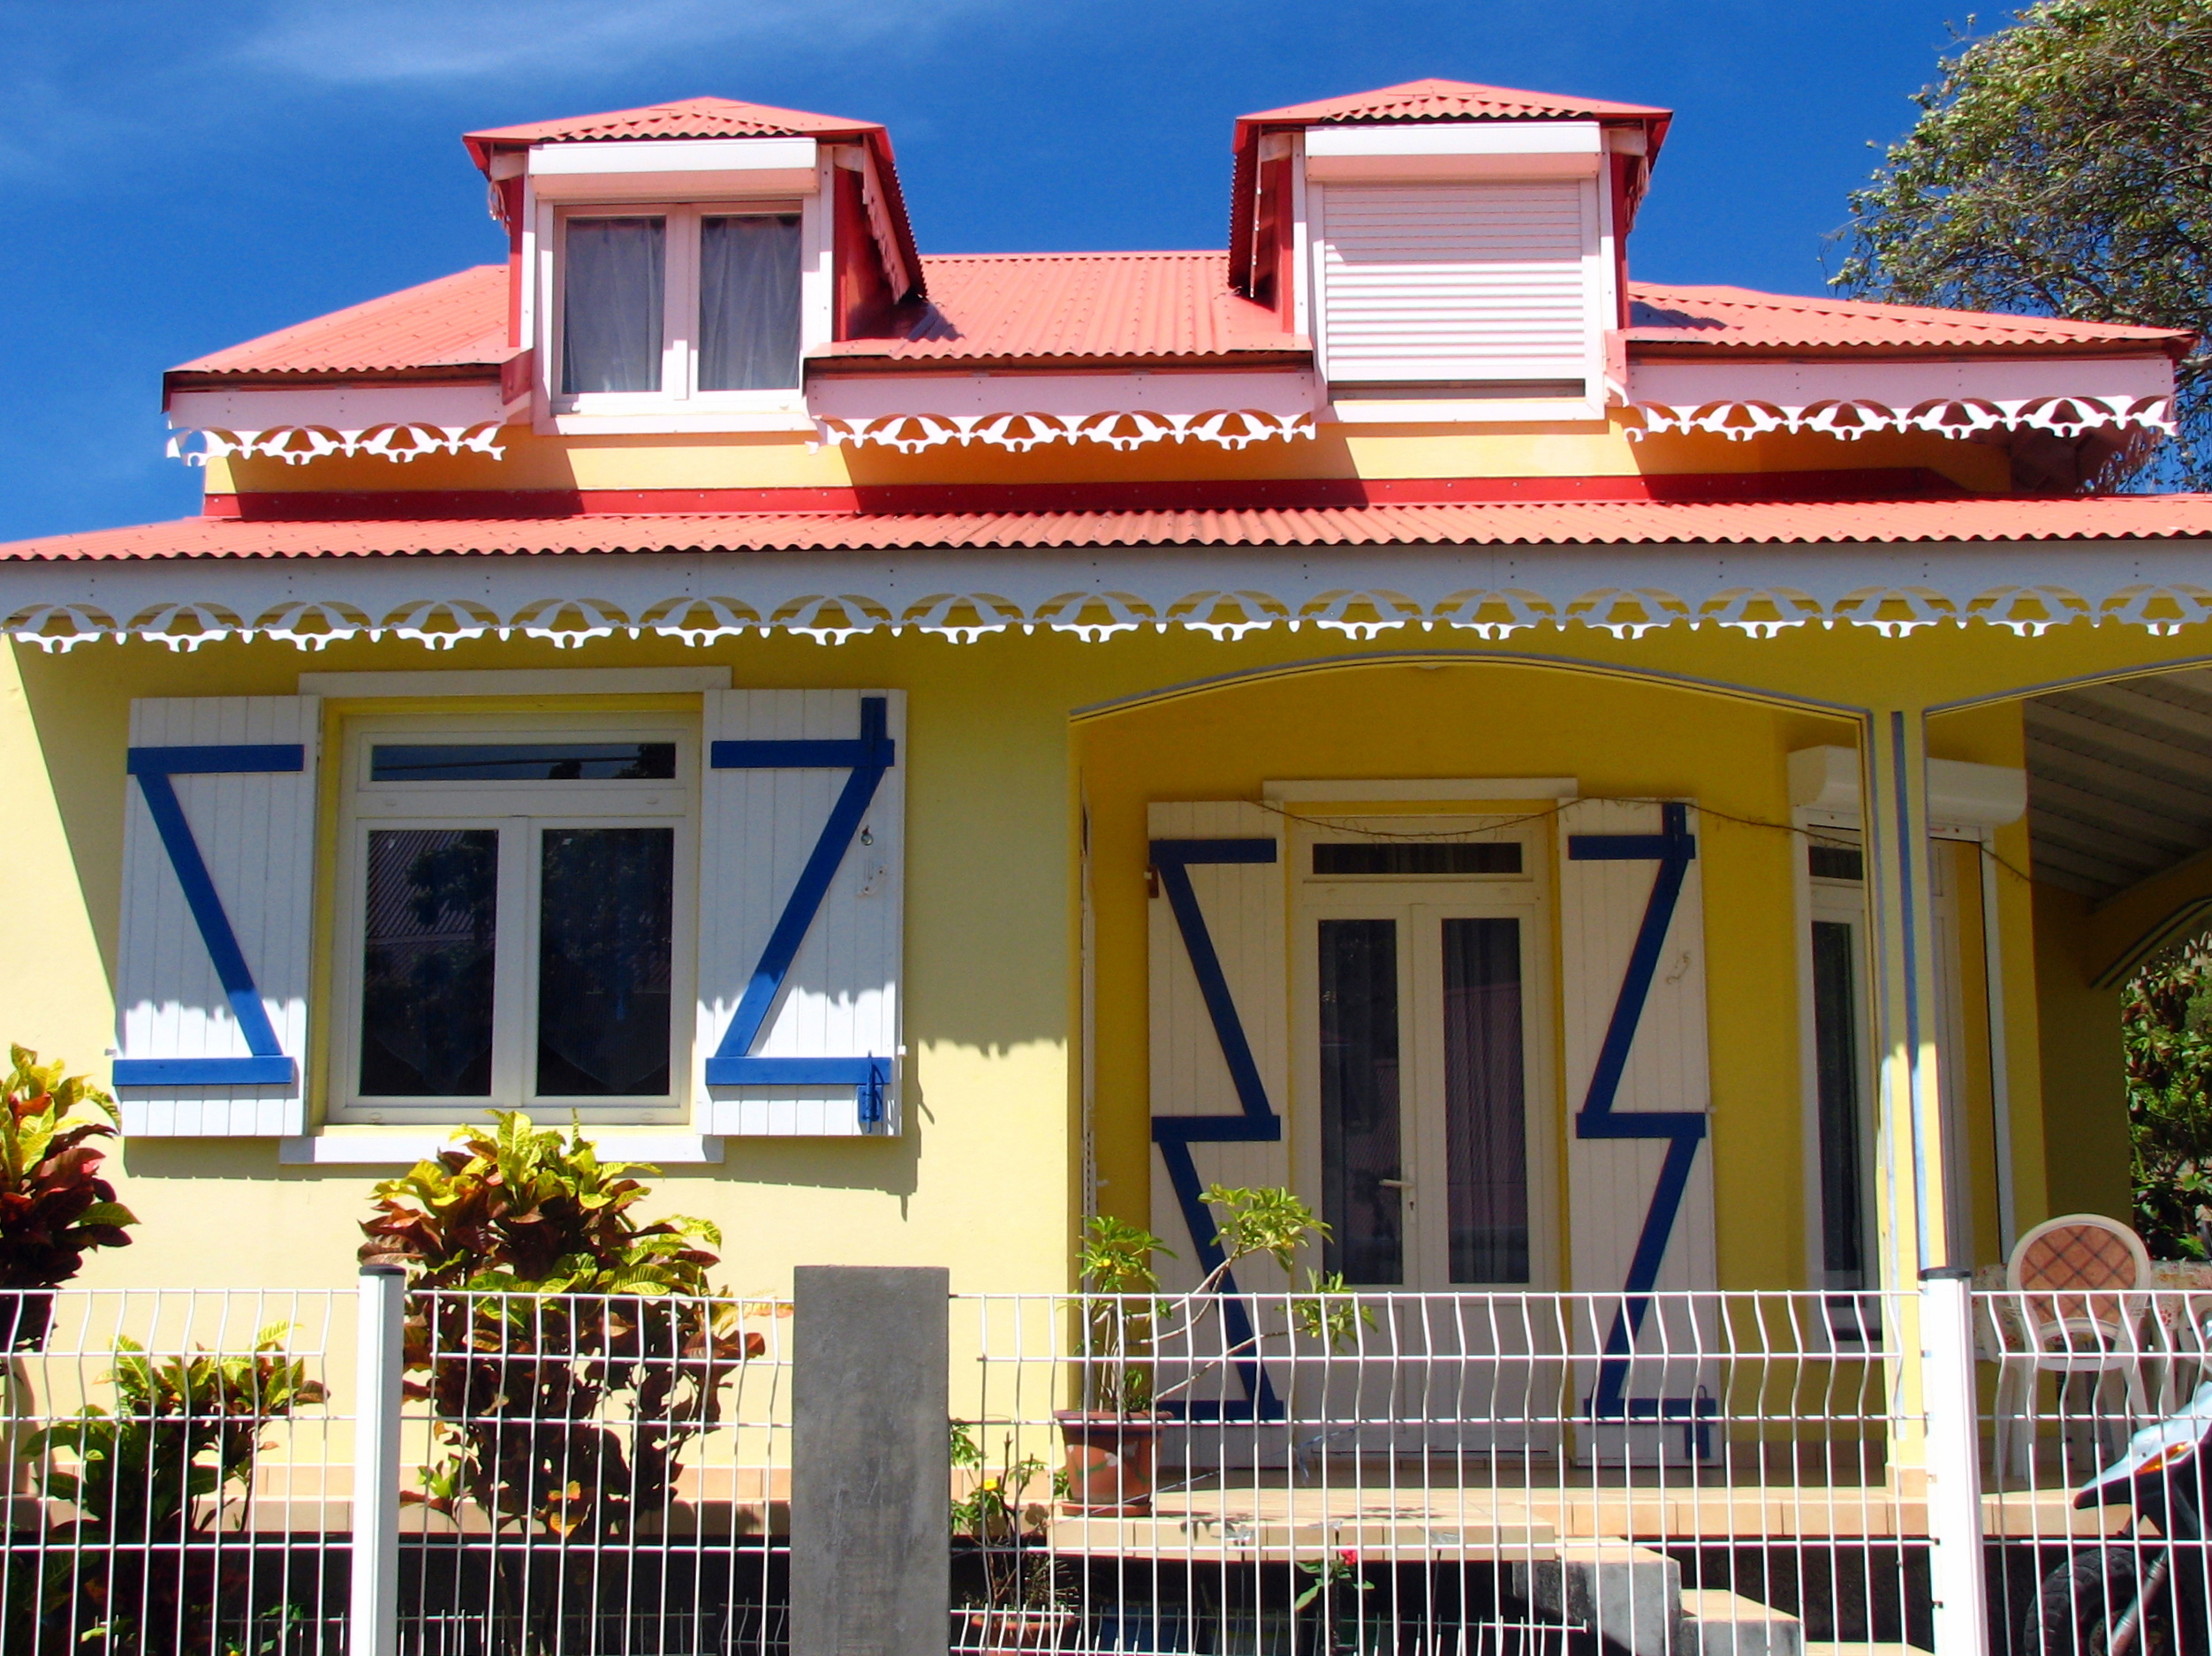 antilles-saintes-tropical-houses-colorful-pixtii-image-stock